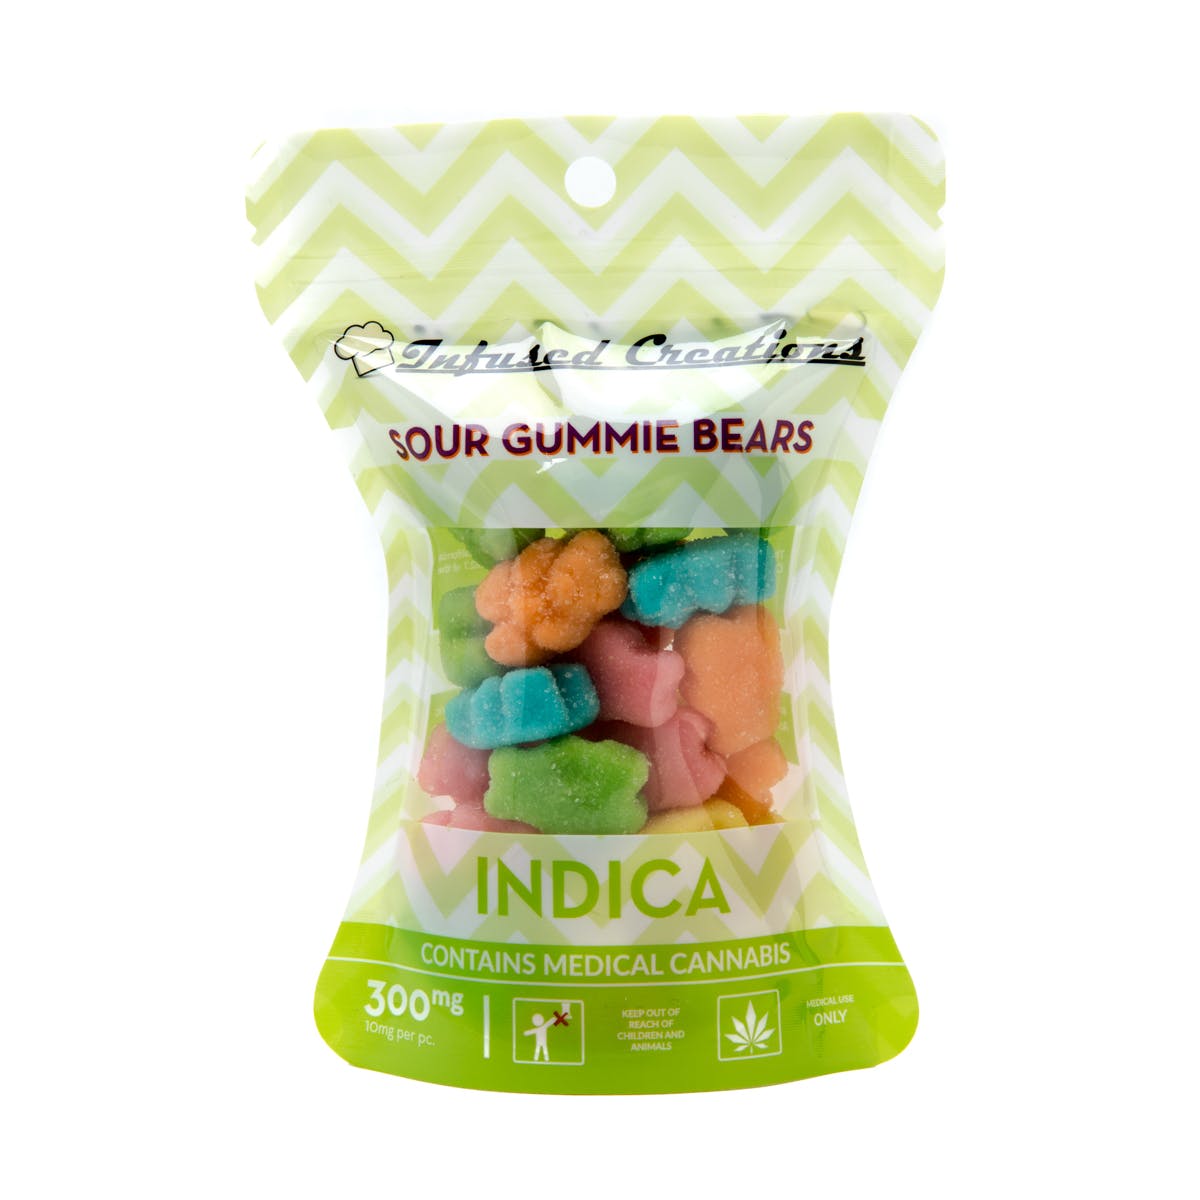 Sour Gummi Bears Indica, 300mg